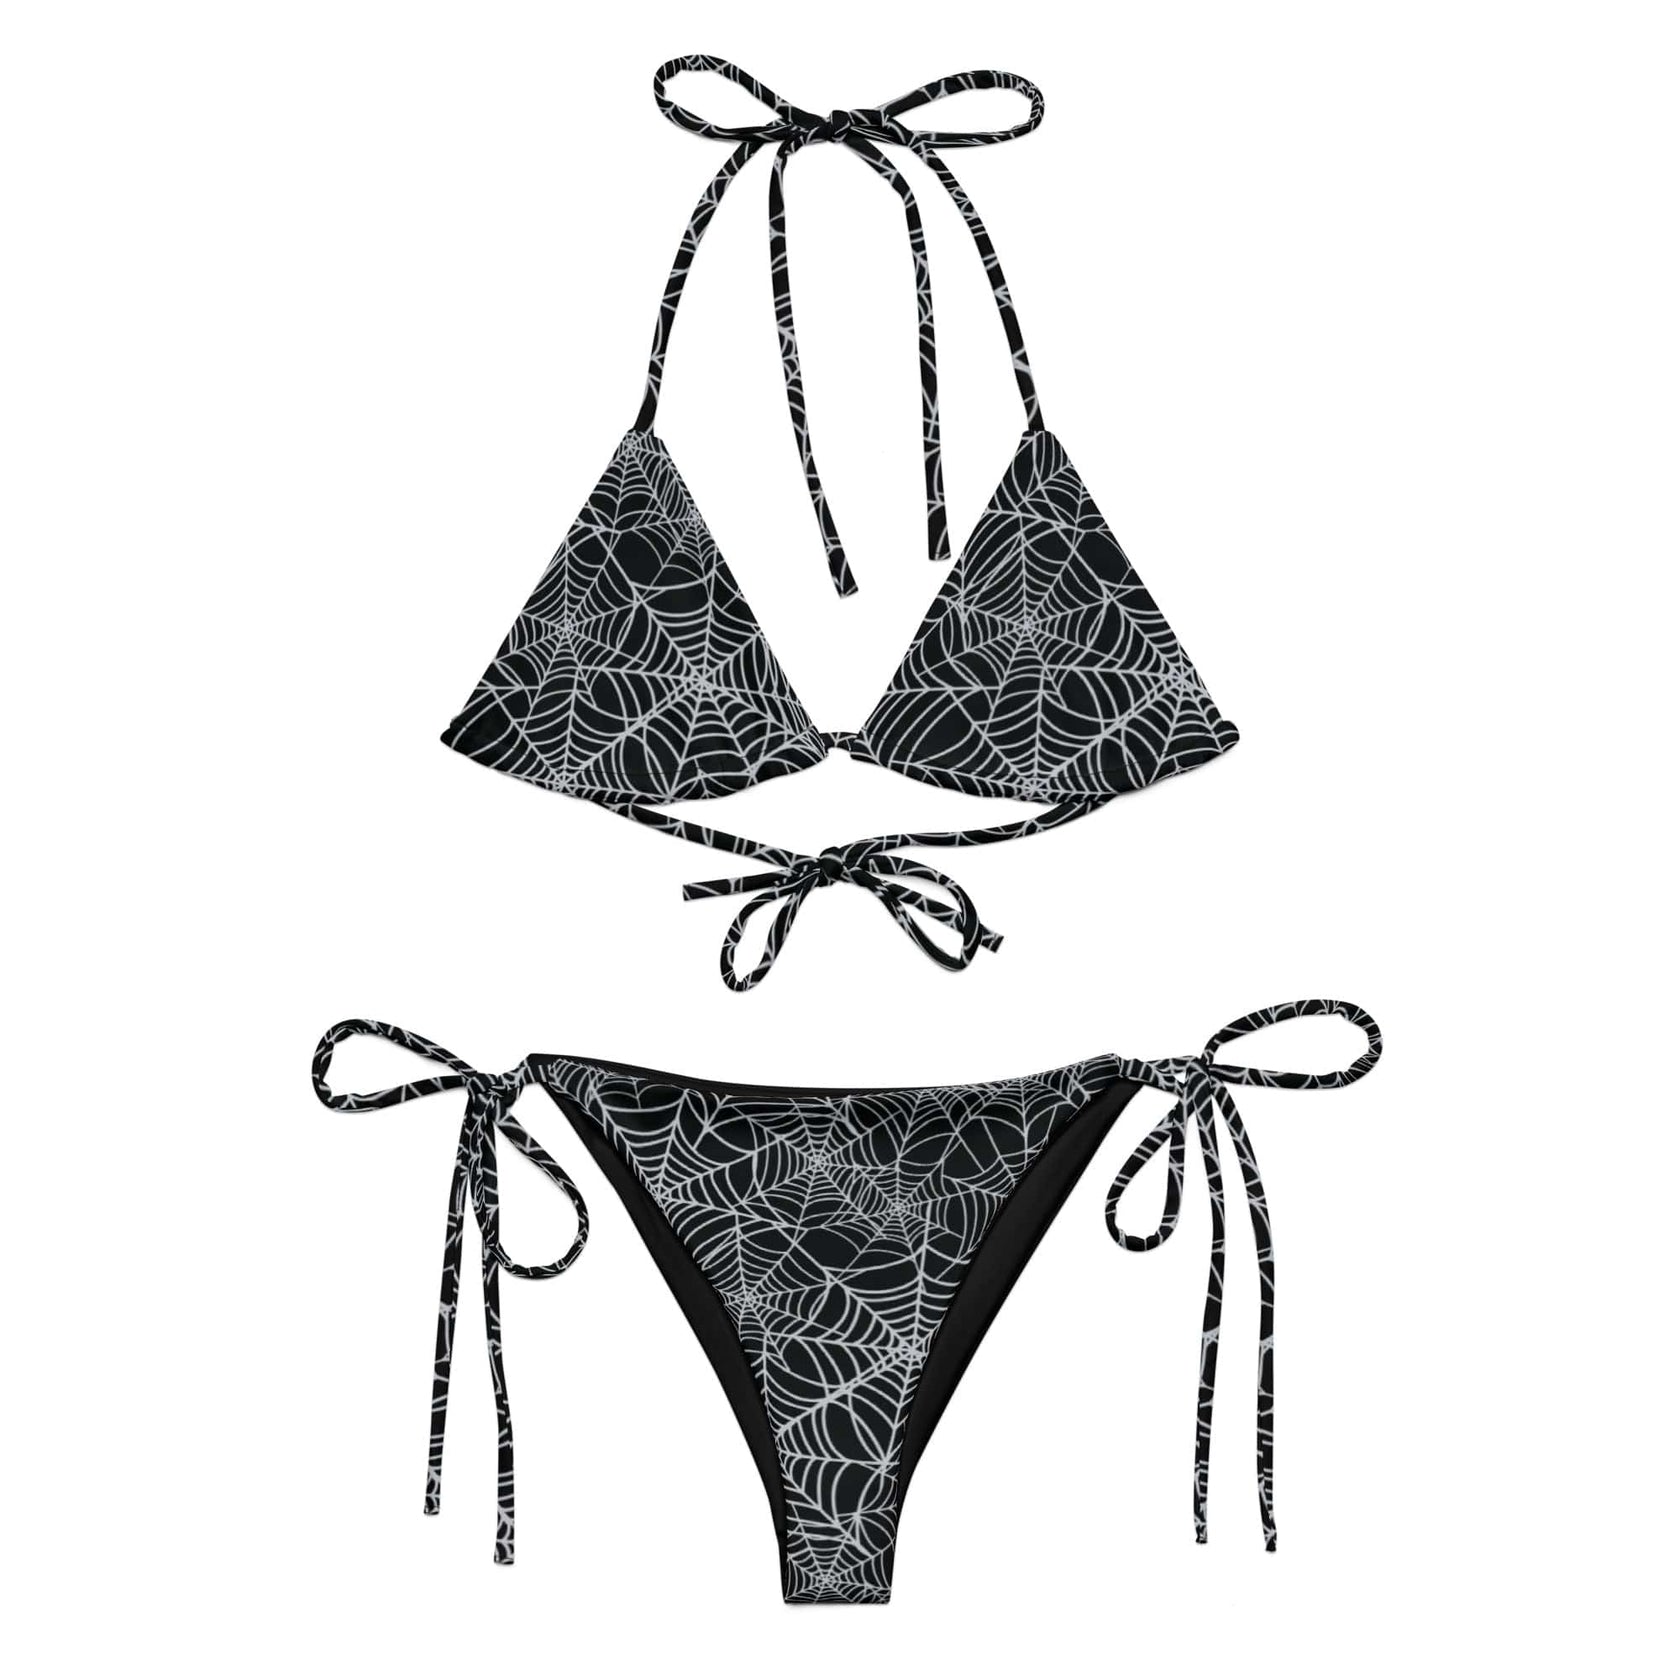 Spiderweb string bikini – Wearecrimsonclover